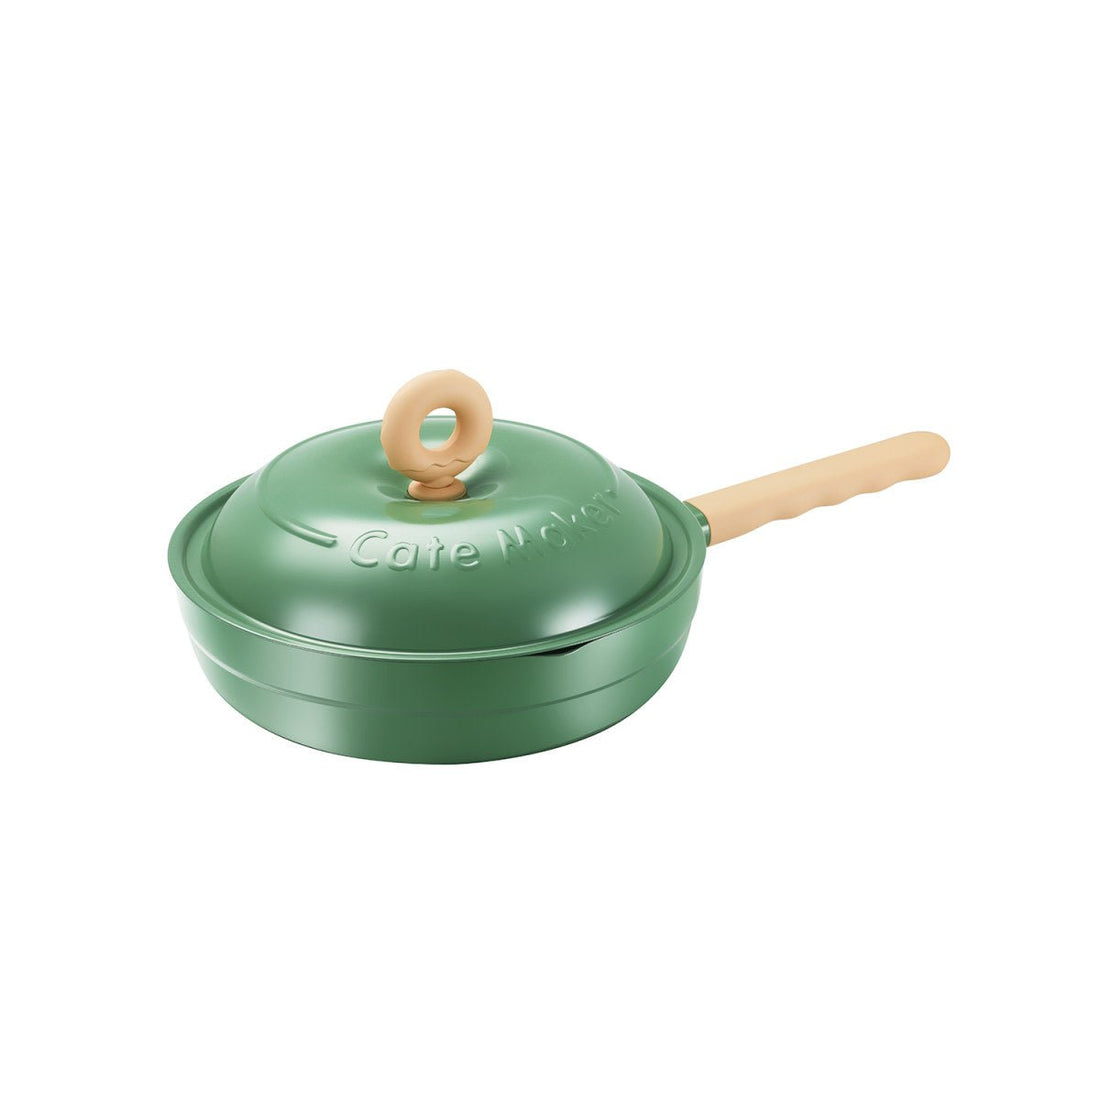 Donut Lightweight 28cm Green Non-stick Enamel-coated Frying Pan - 0cm